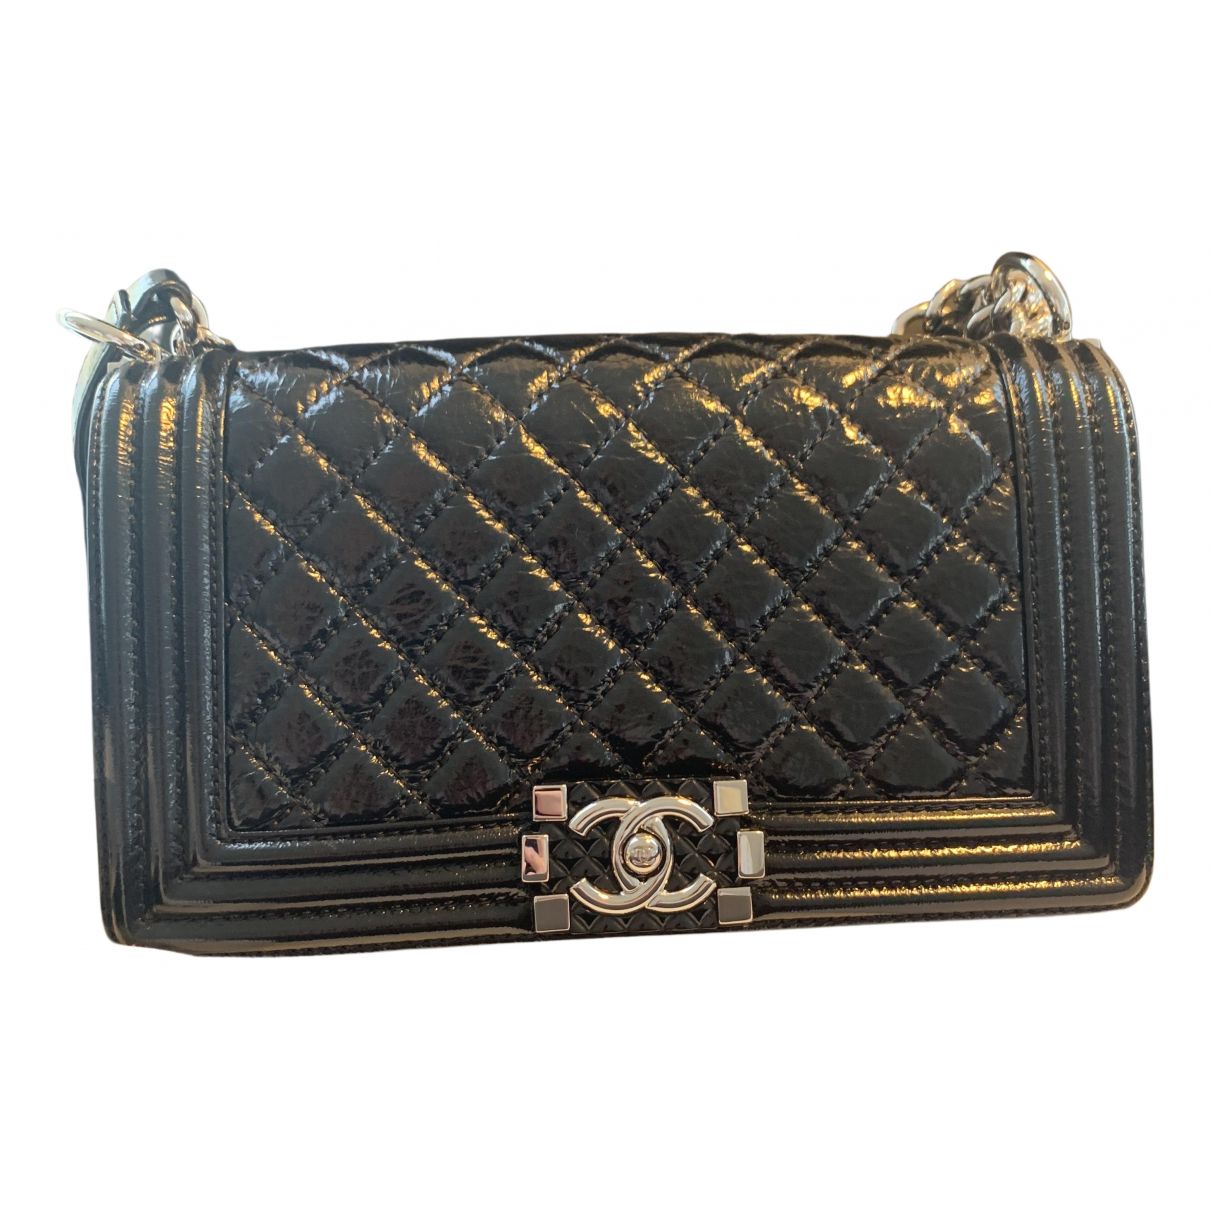 Chanel Boy Black Patent leather Handbags | Vestiaire Collective (Global)